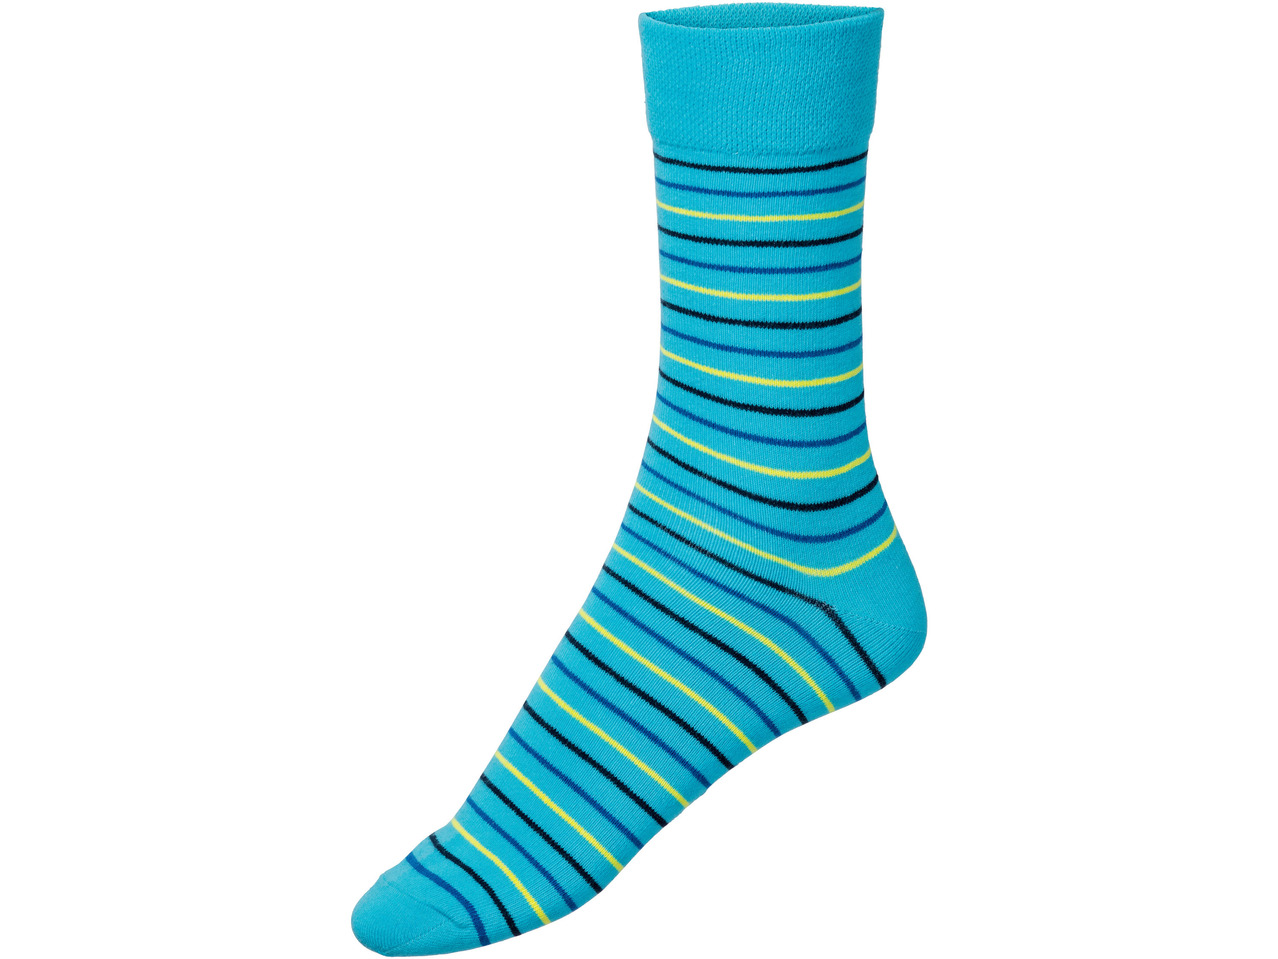 ESMARA/LIVERGY Ladies'/Men's Socks